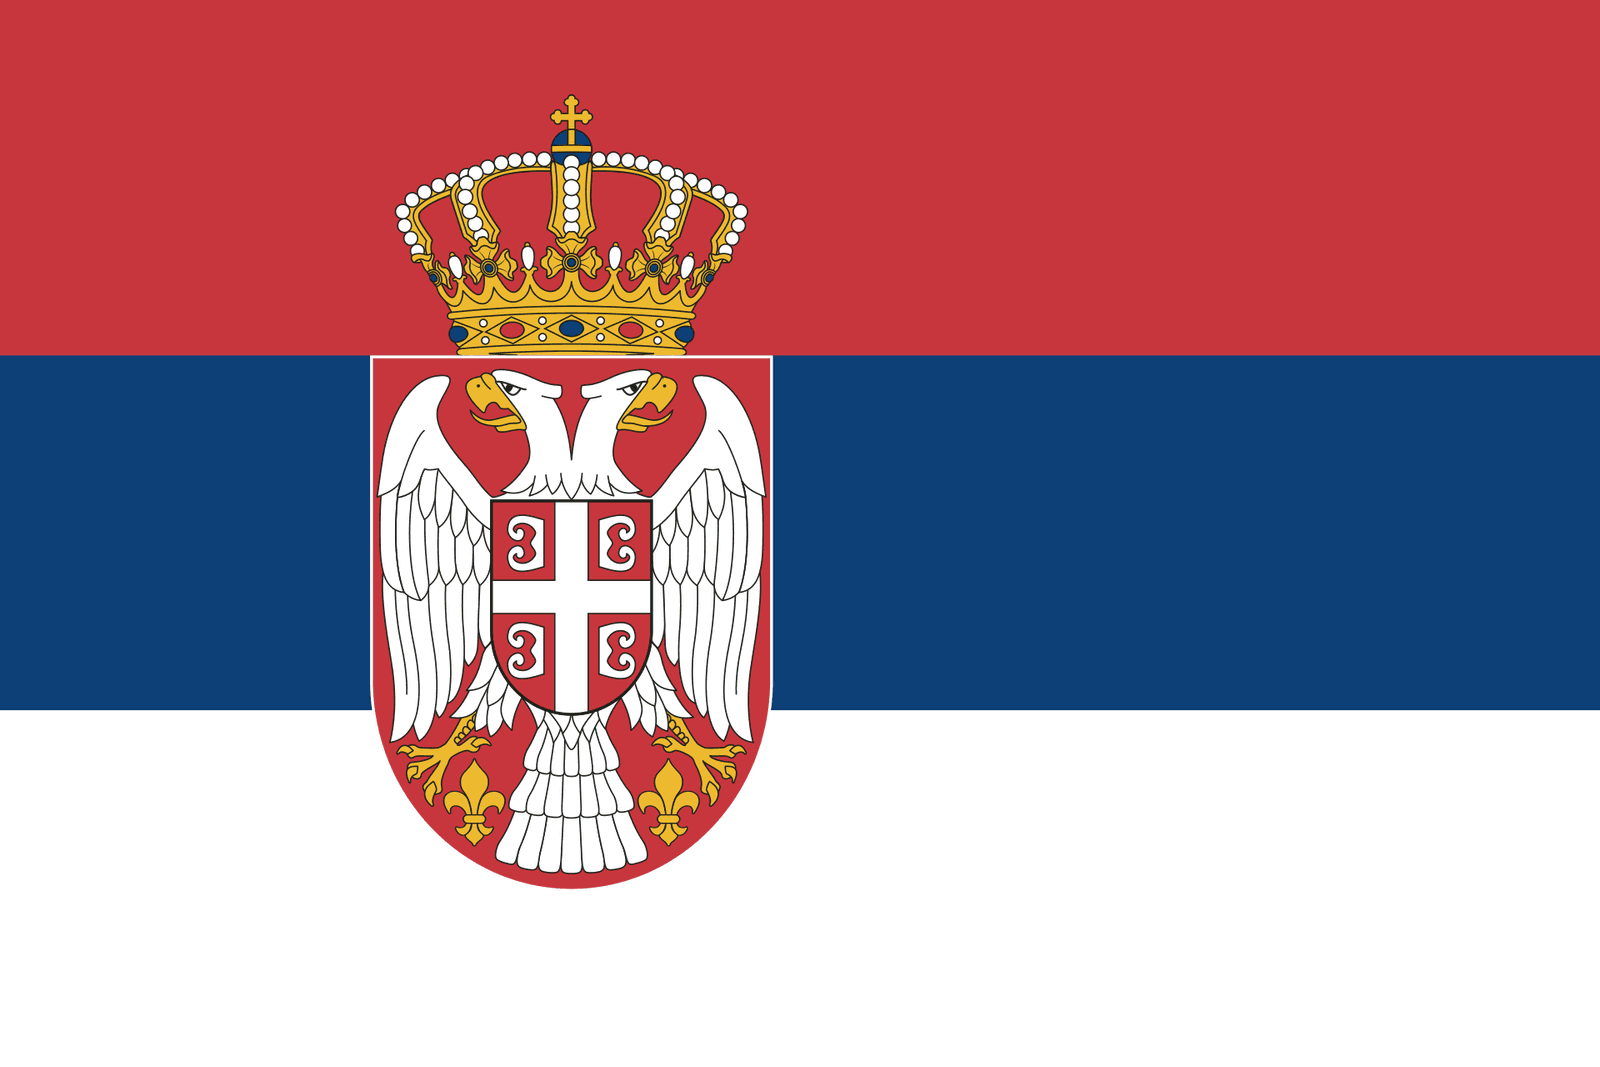 Serbia (A1 Serbia)